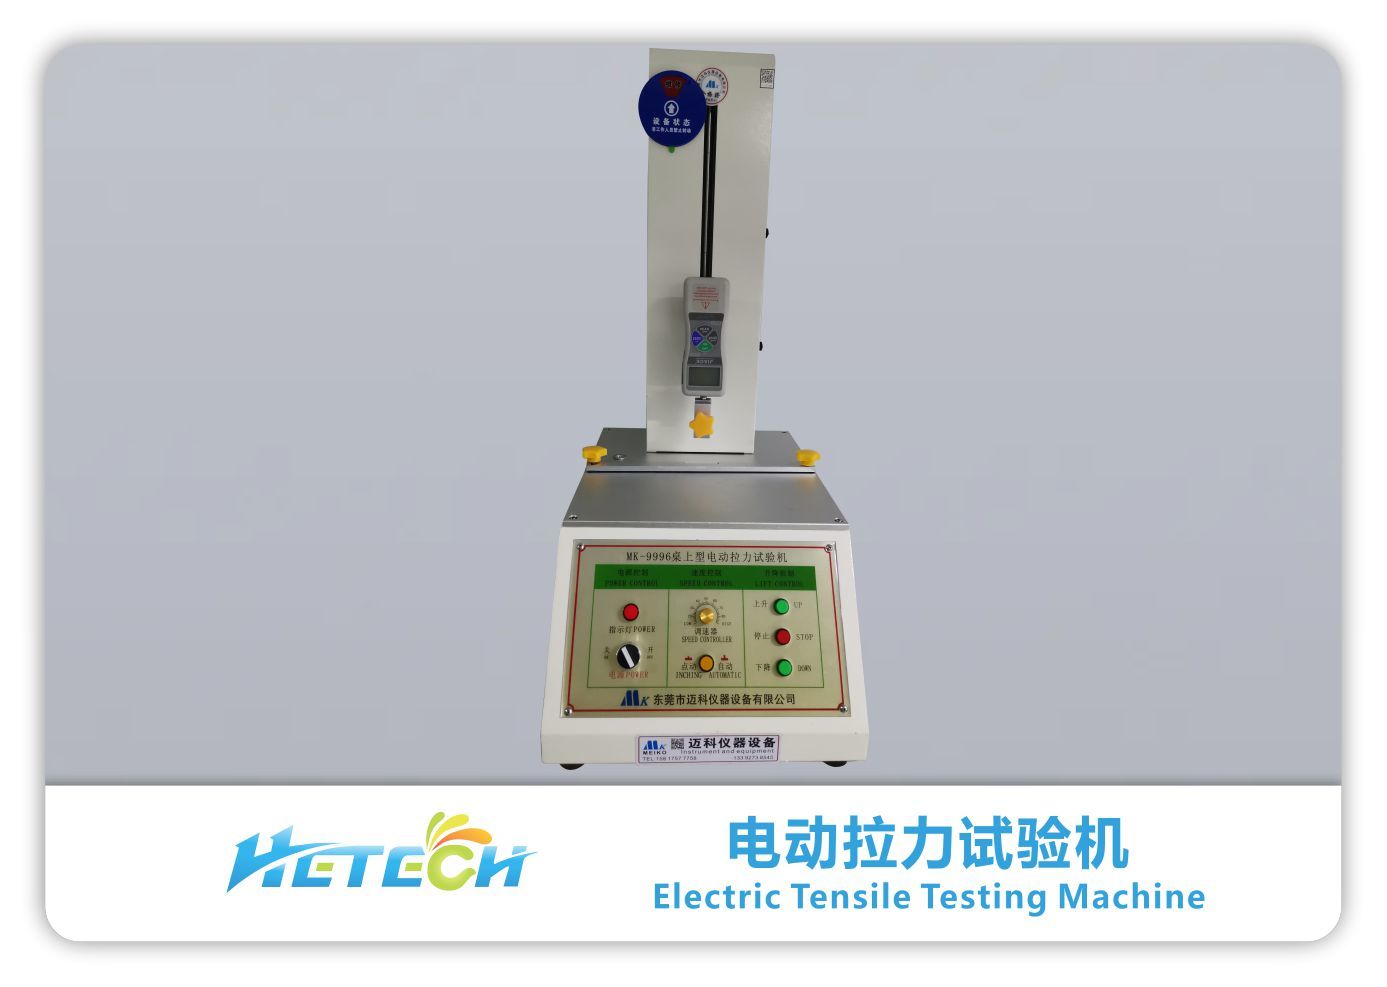 Electric Tensile Testing Machine